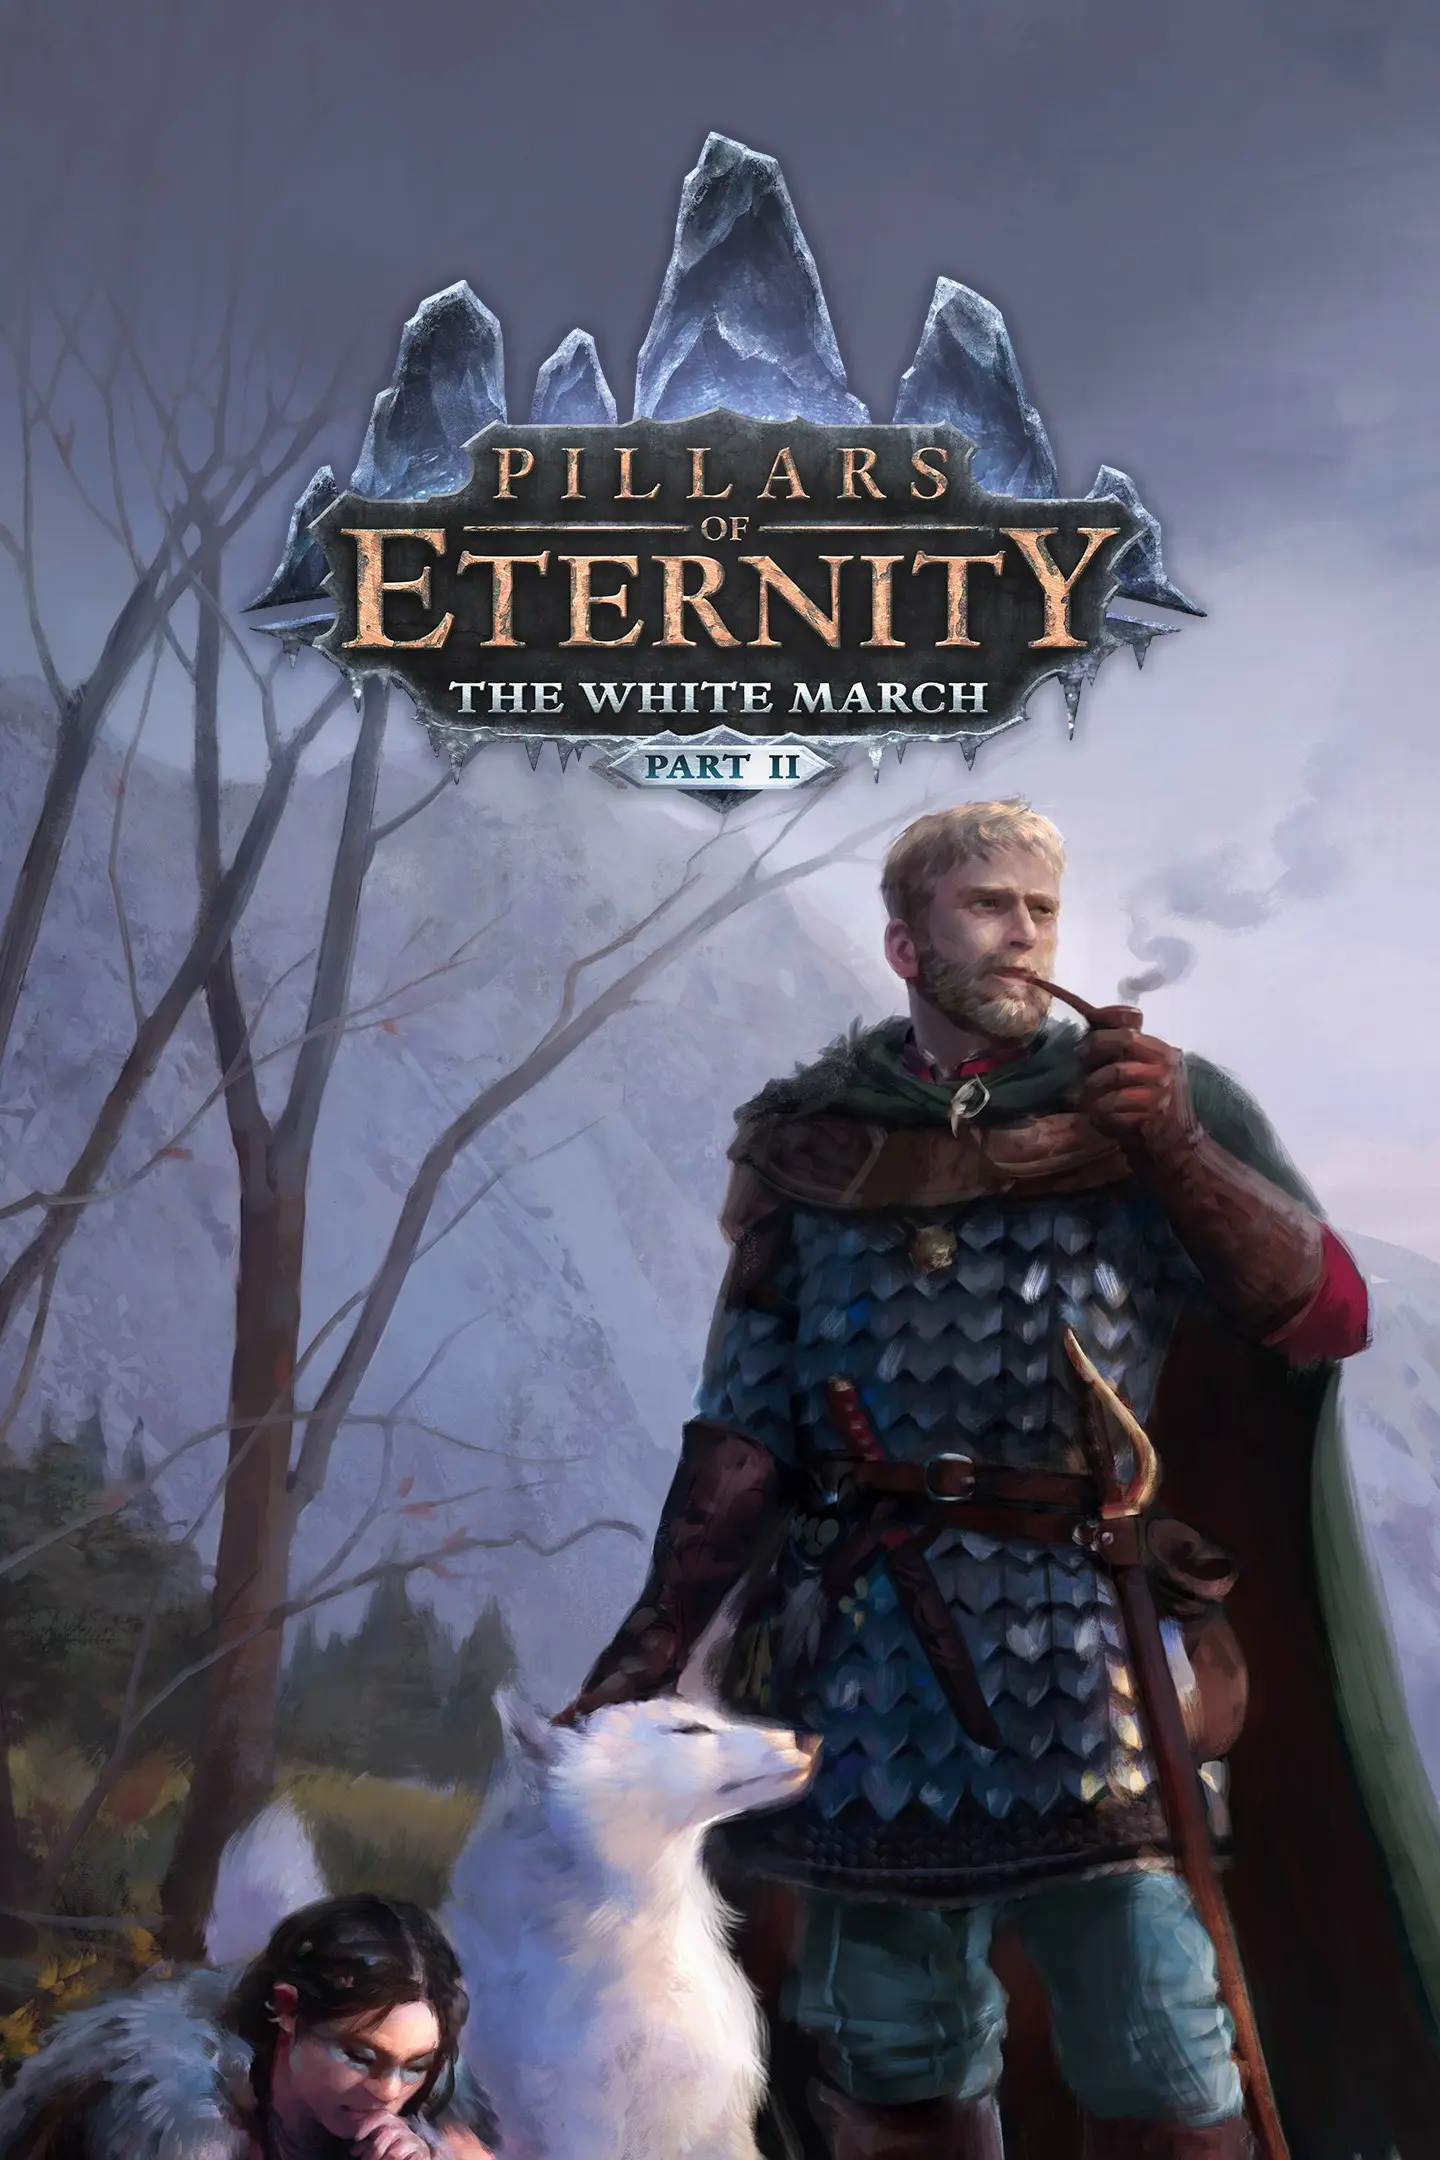 Pillars of Eternity - The White March Part II (PC / Mac) - Steam - Digital Code